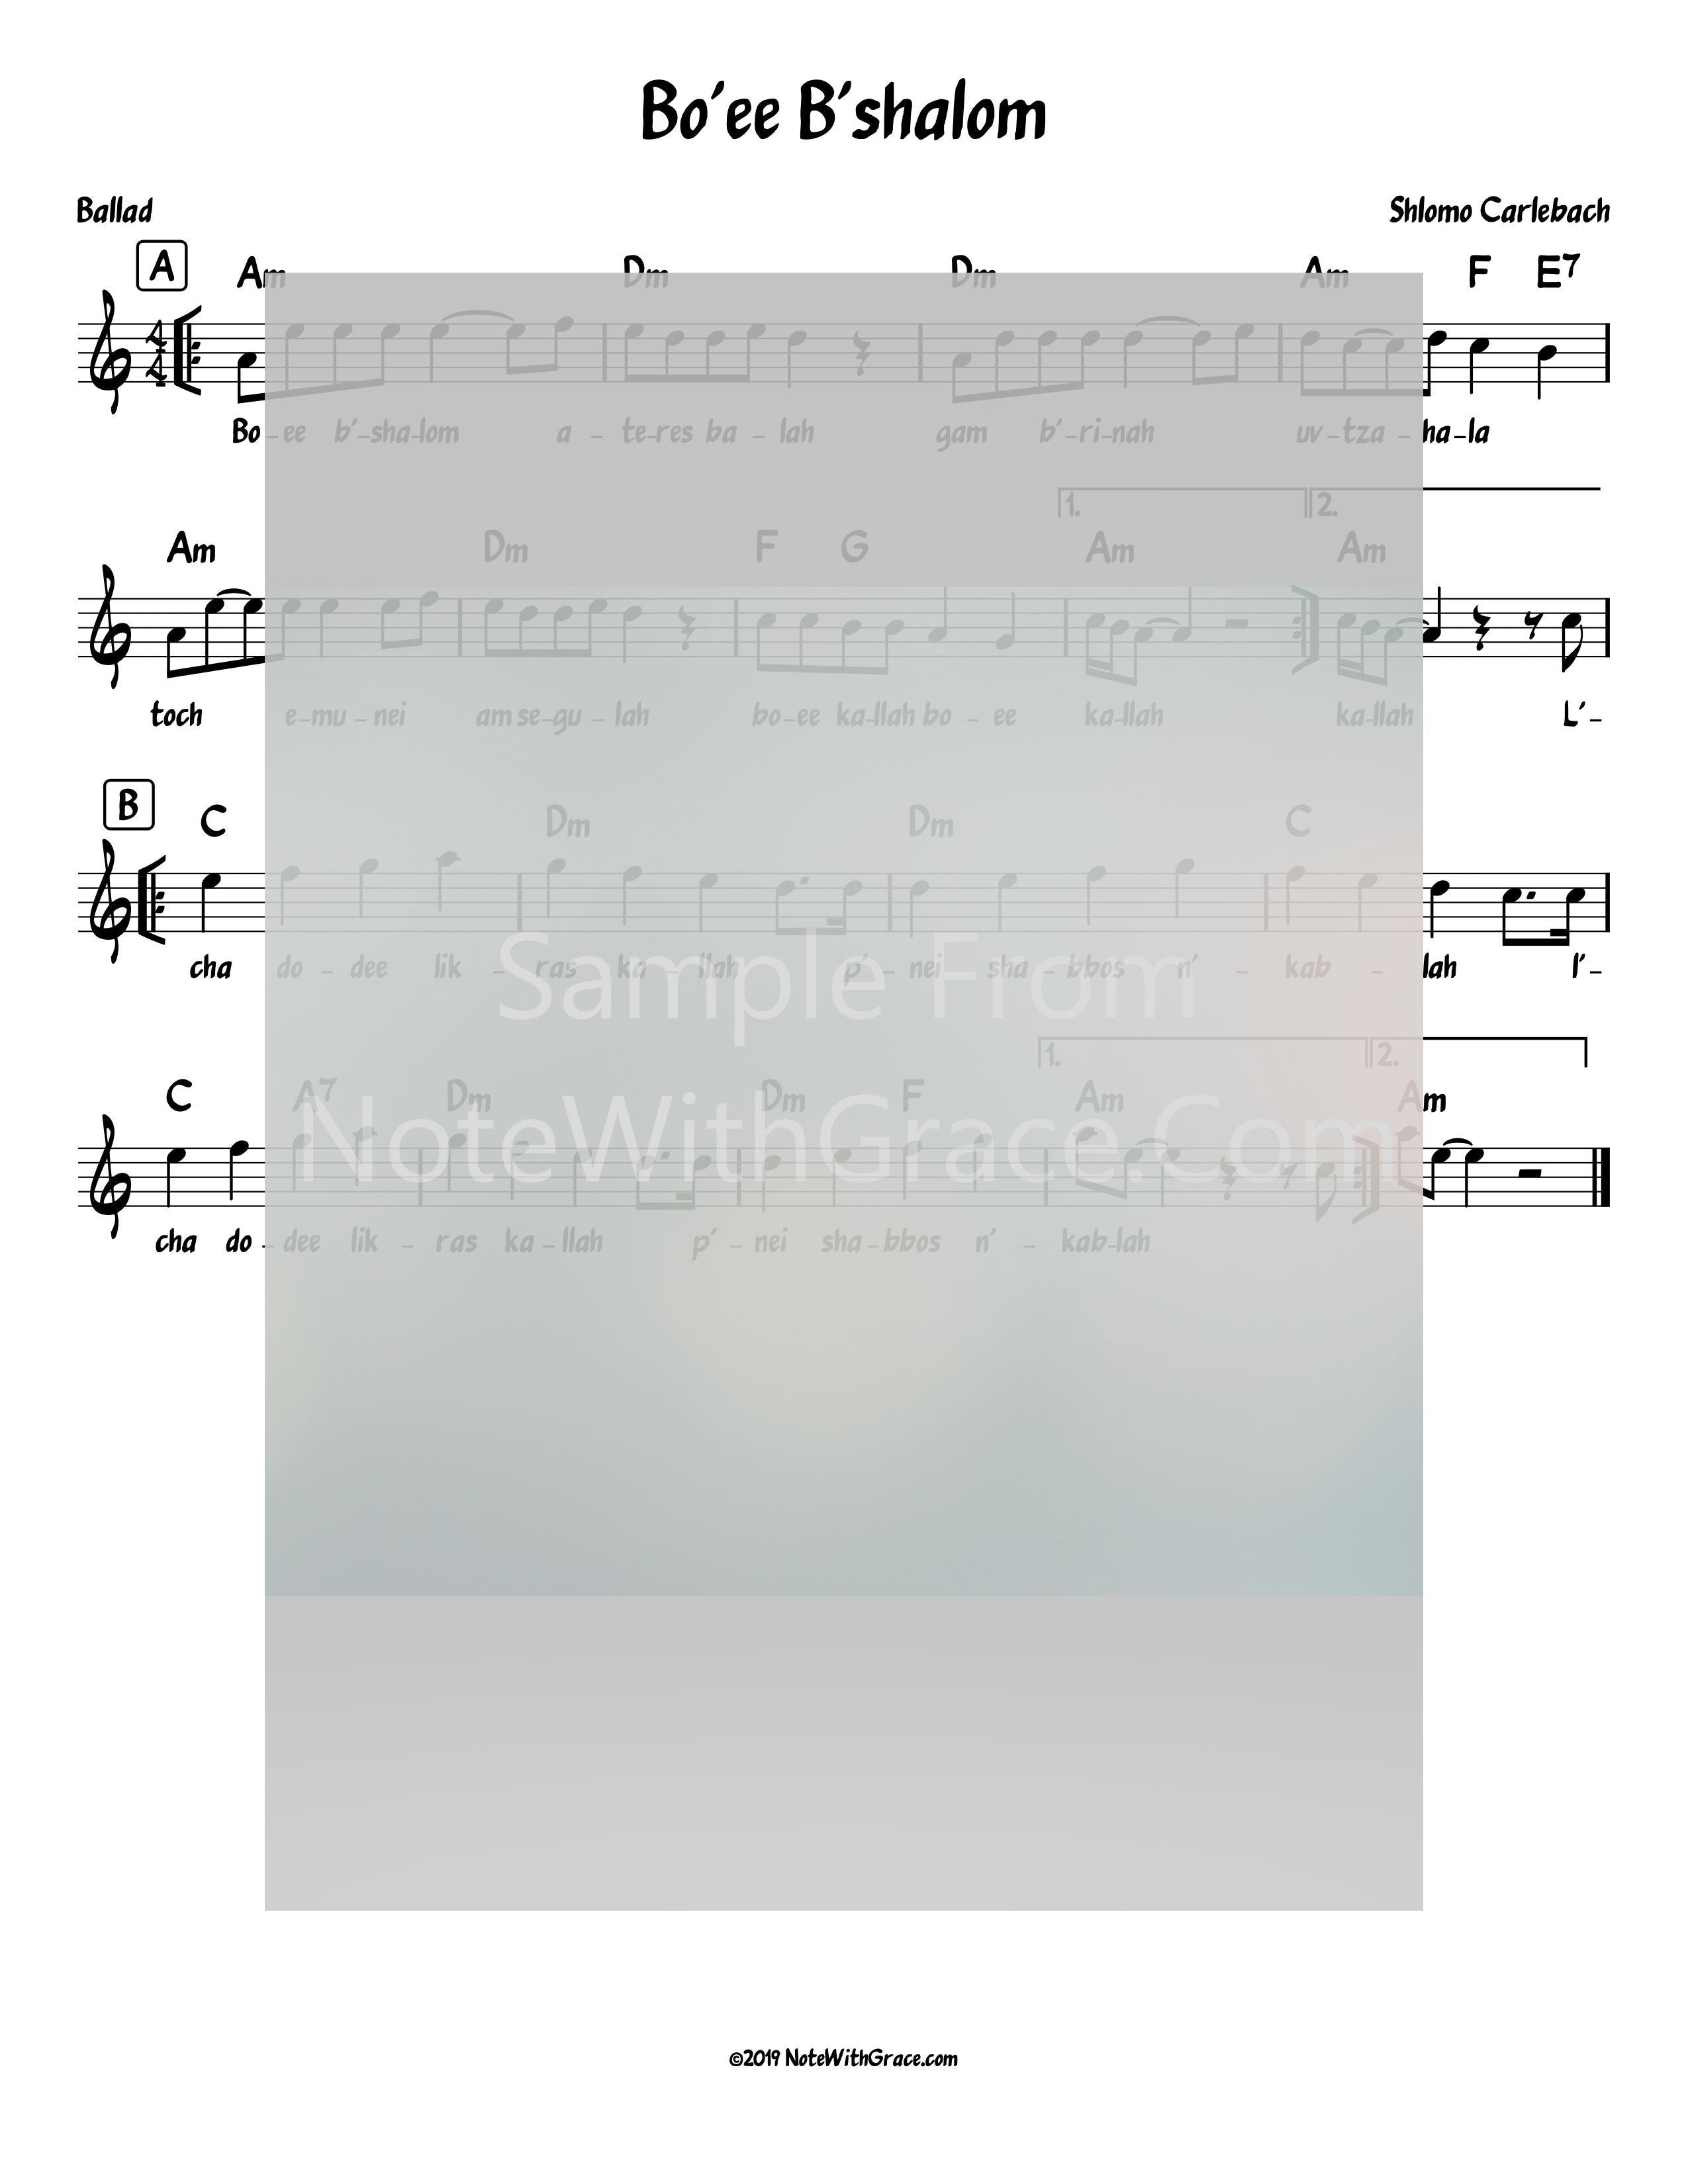 Bo'ee B'shalom Lead Sheet (Shlomo Carlebach)-Sheet music-NoteWithGrace.com